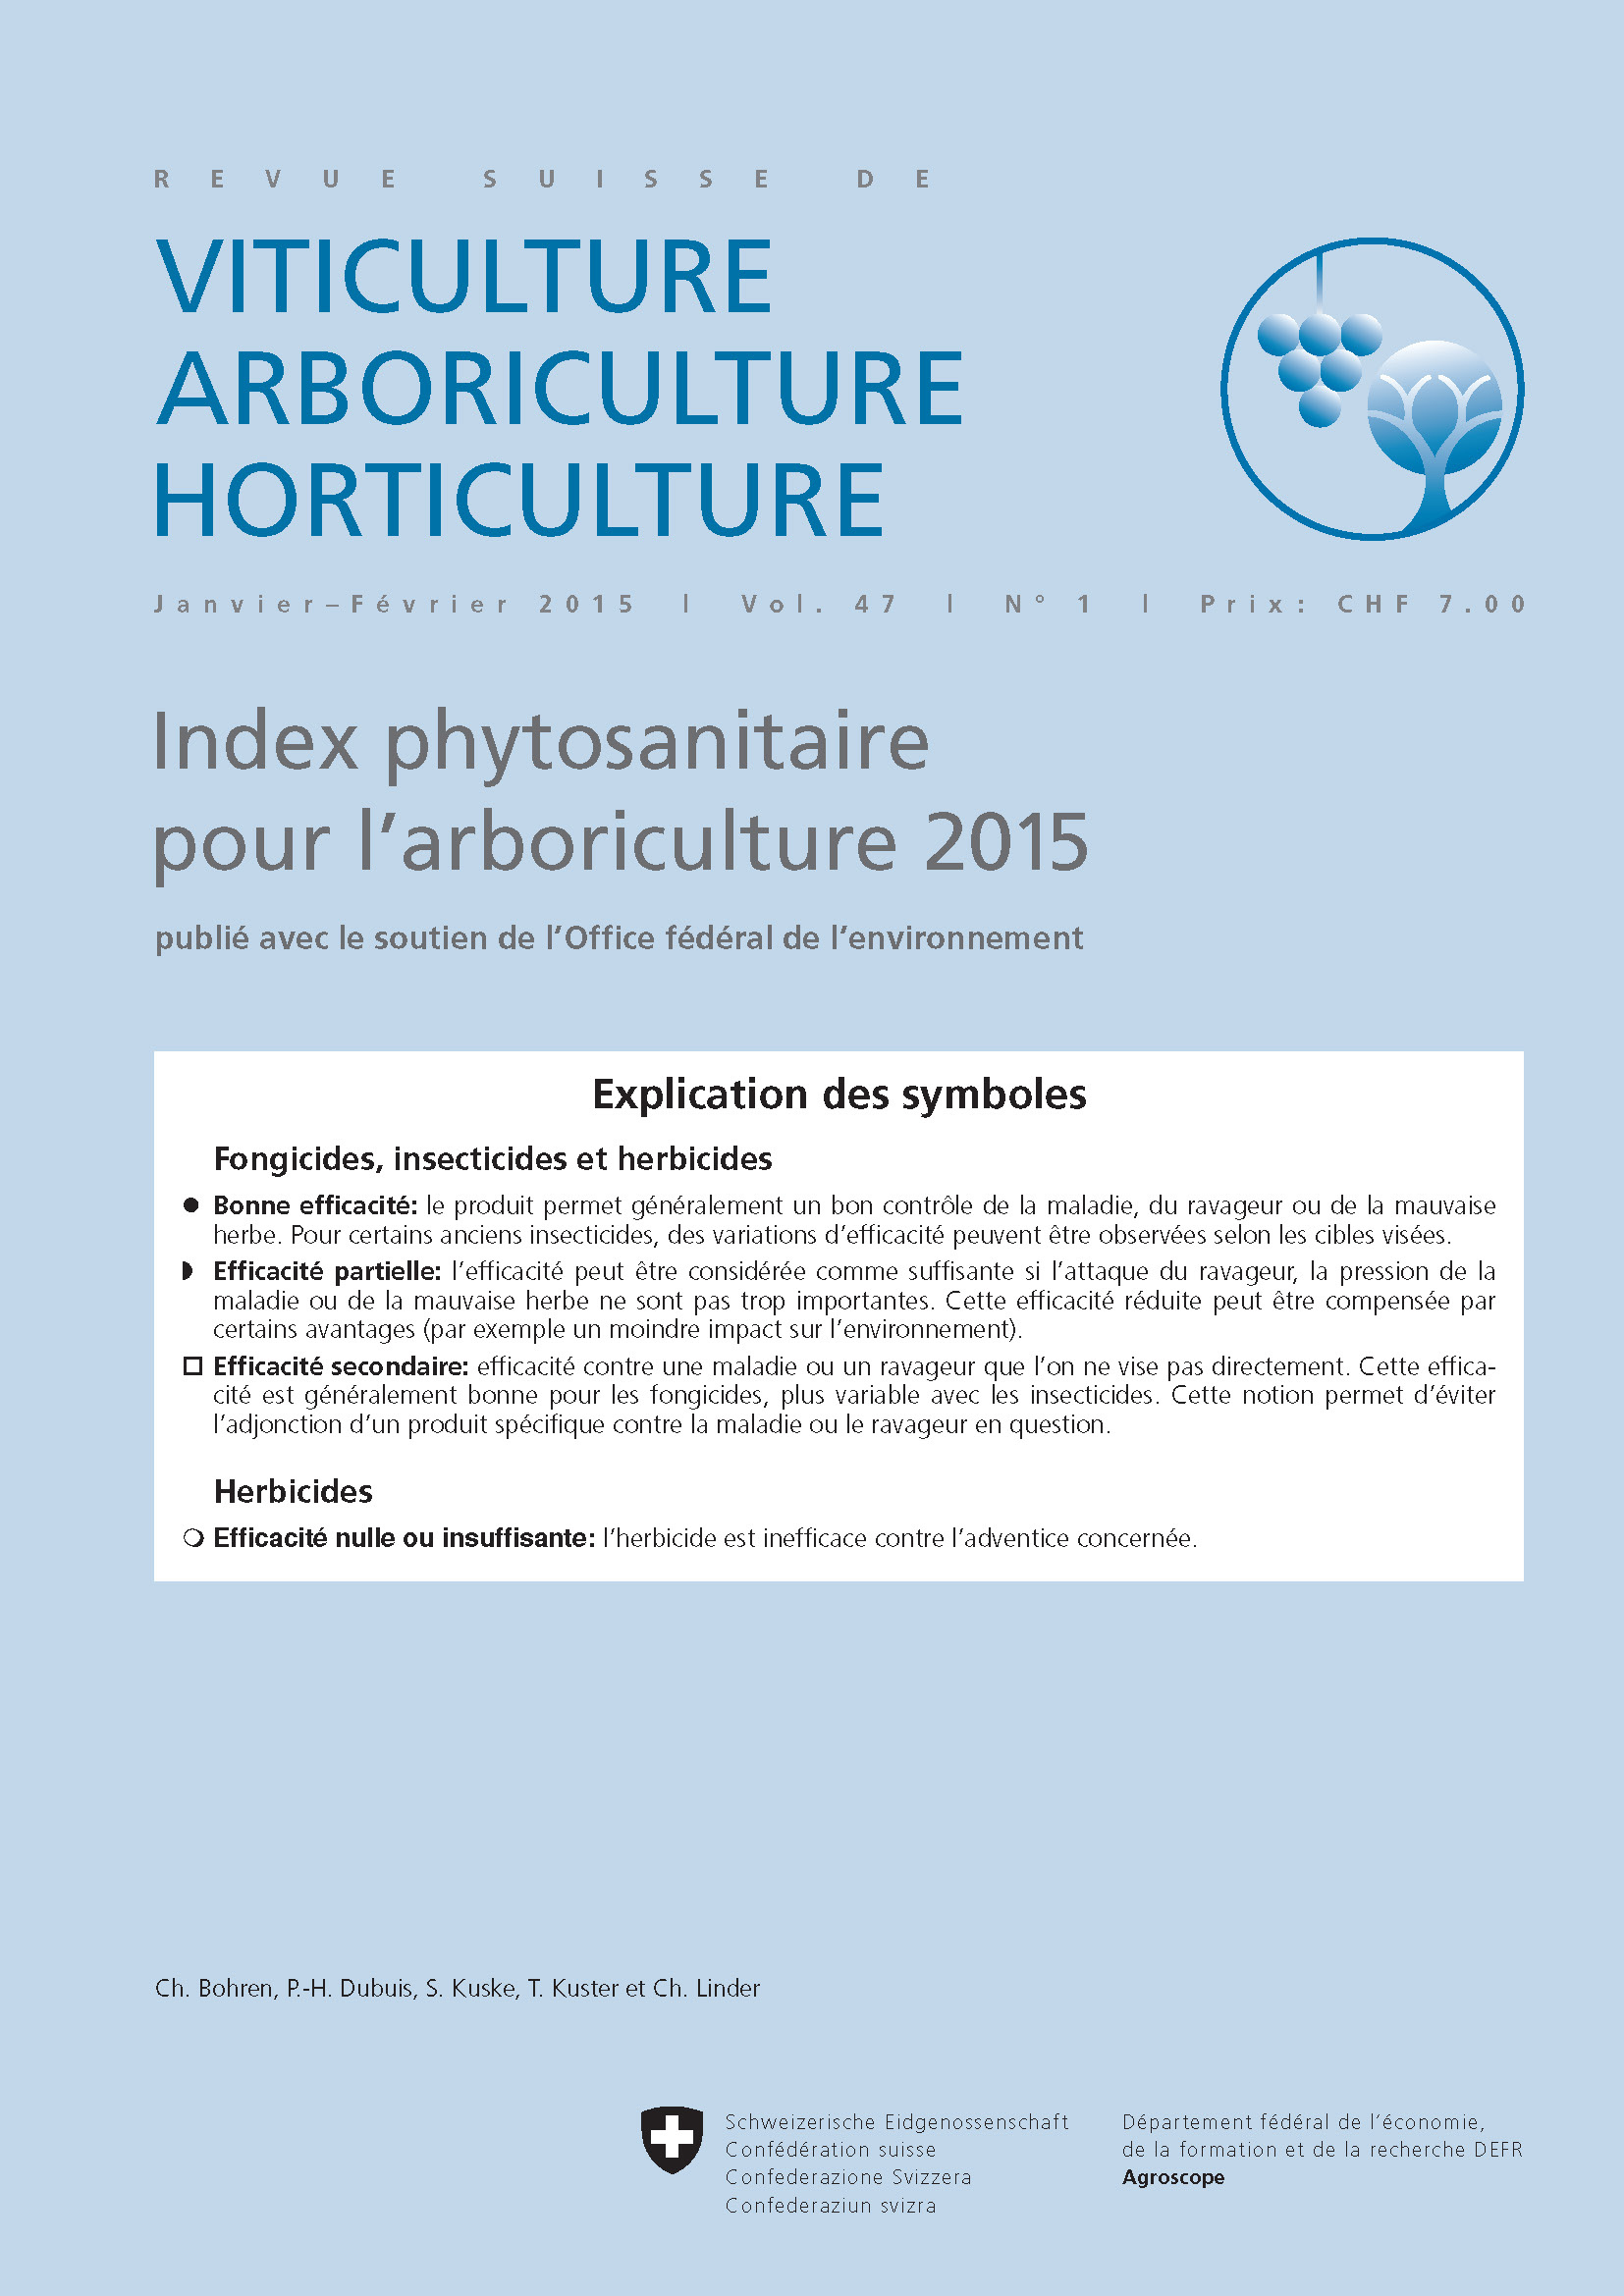 Index phytosanitaire pour l’arboriculture 2015